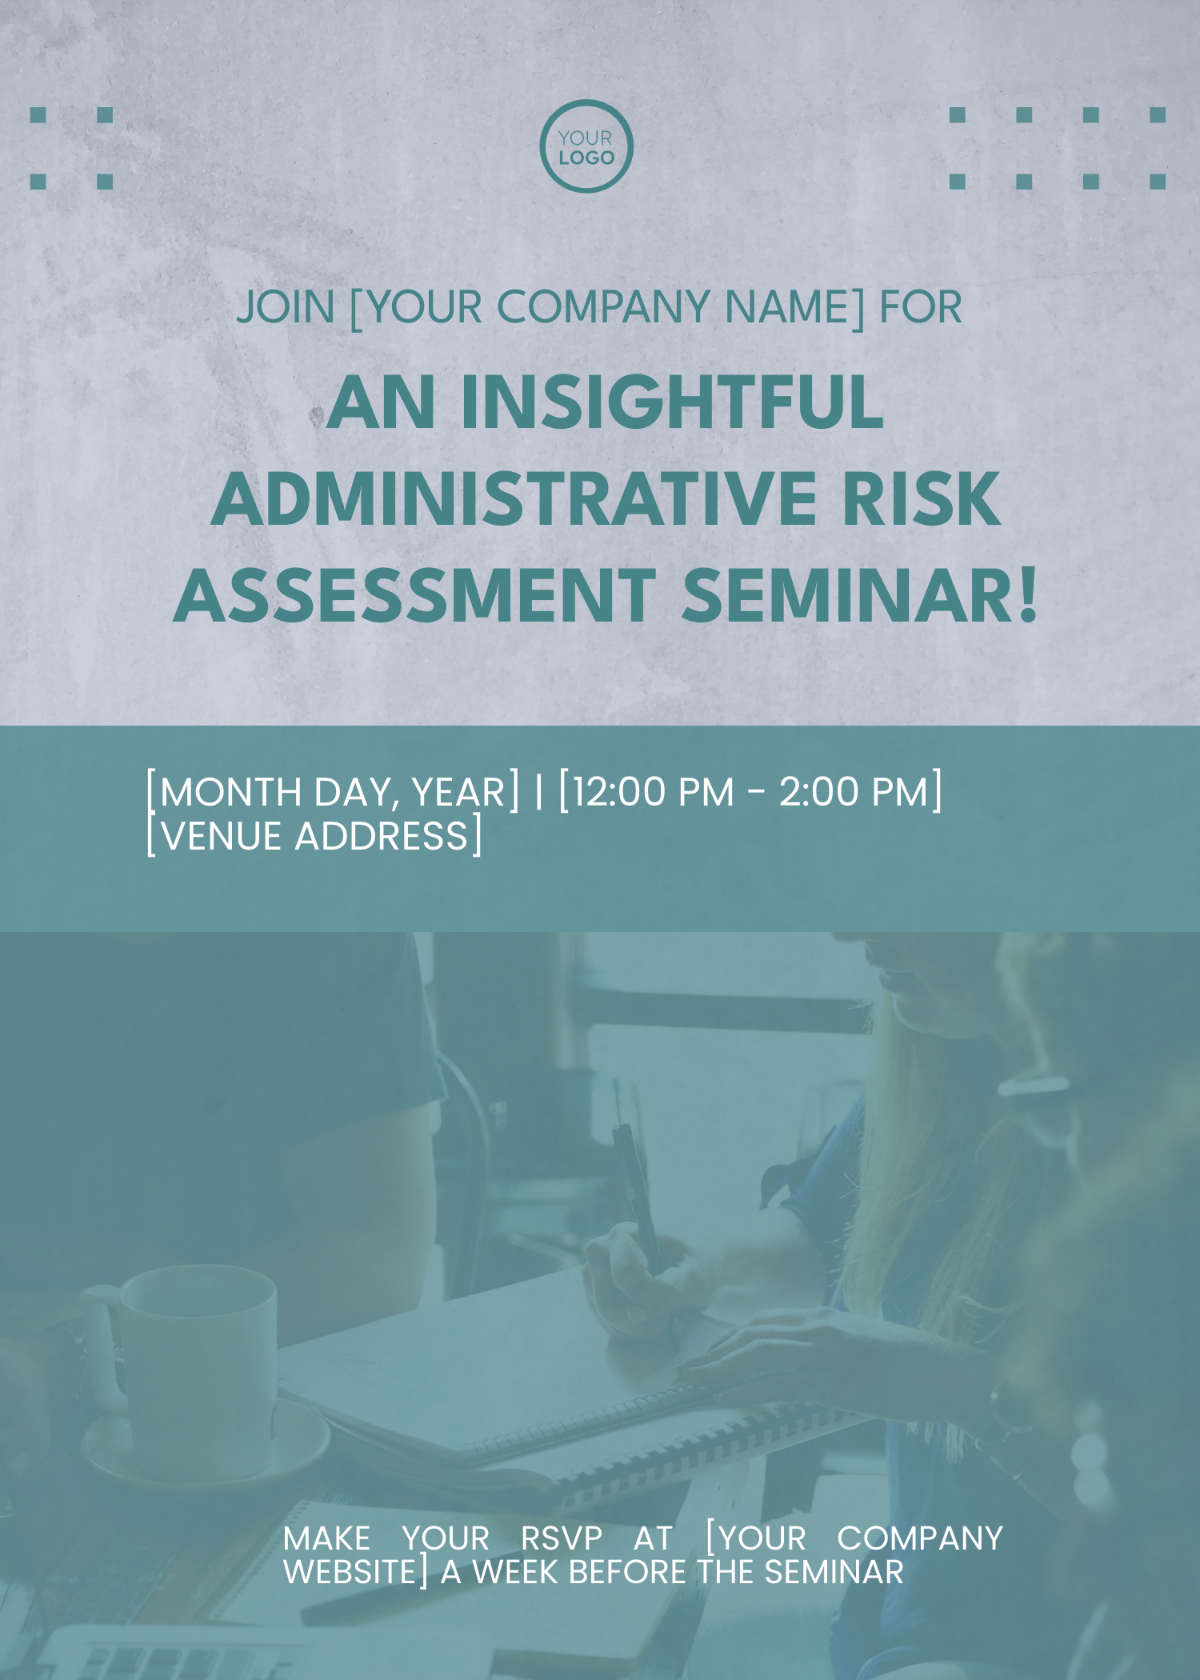 Administrative Risk Assessment Seminar Invitation Card